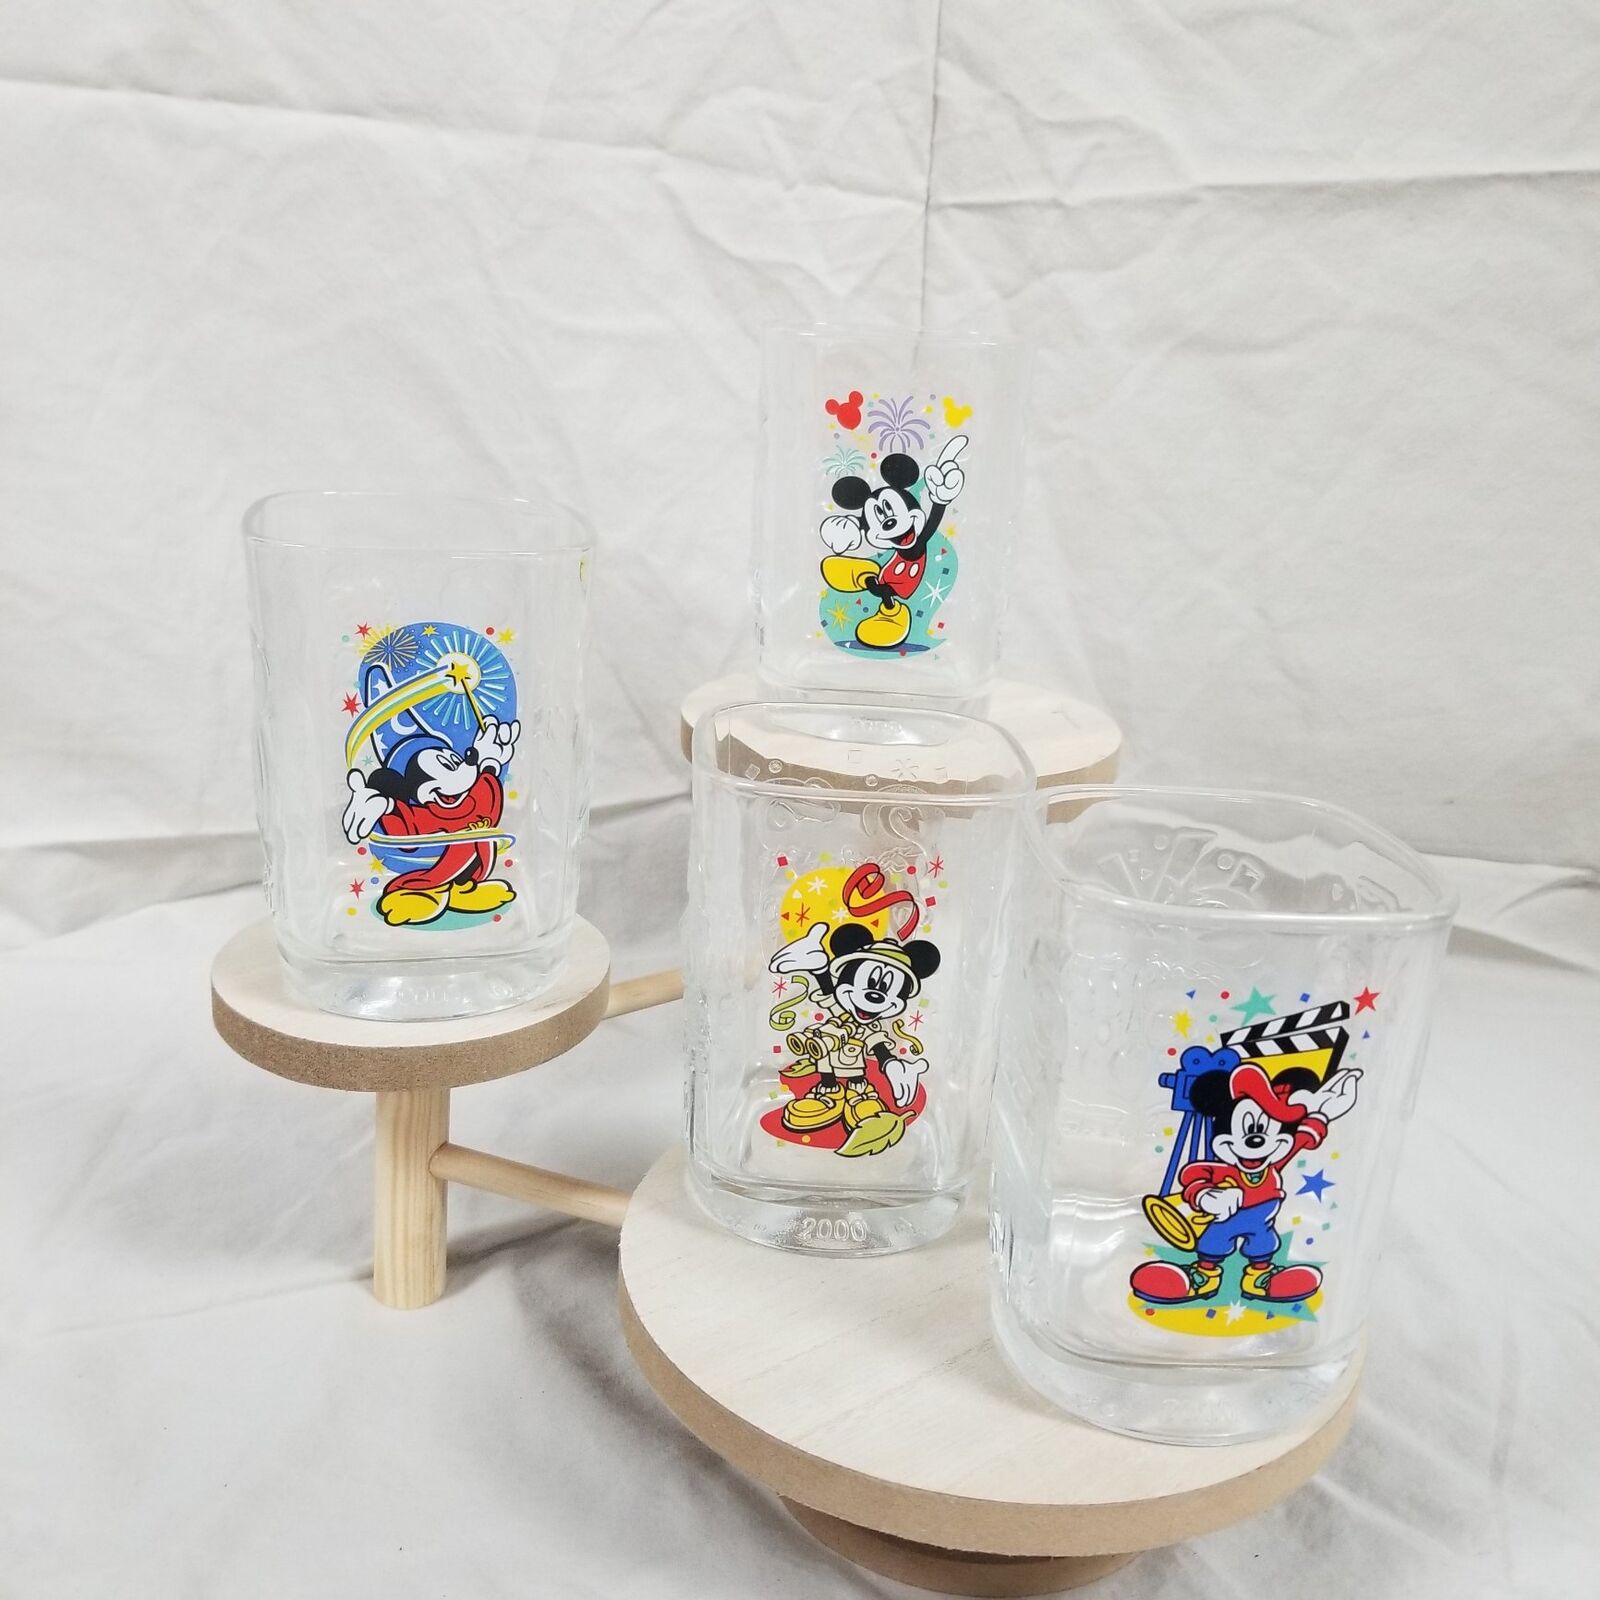 2000 Walt Disney World McDonald's Mickey Mouse Square Glasses Set of 4 Vintage